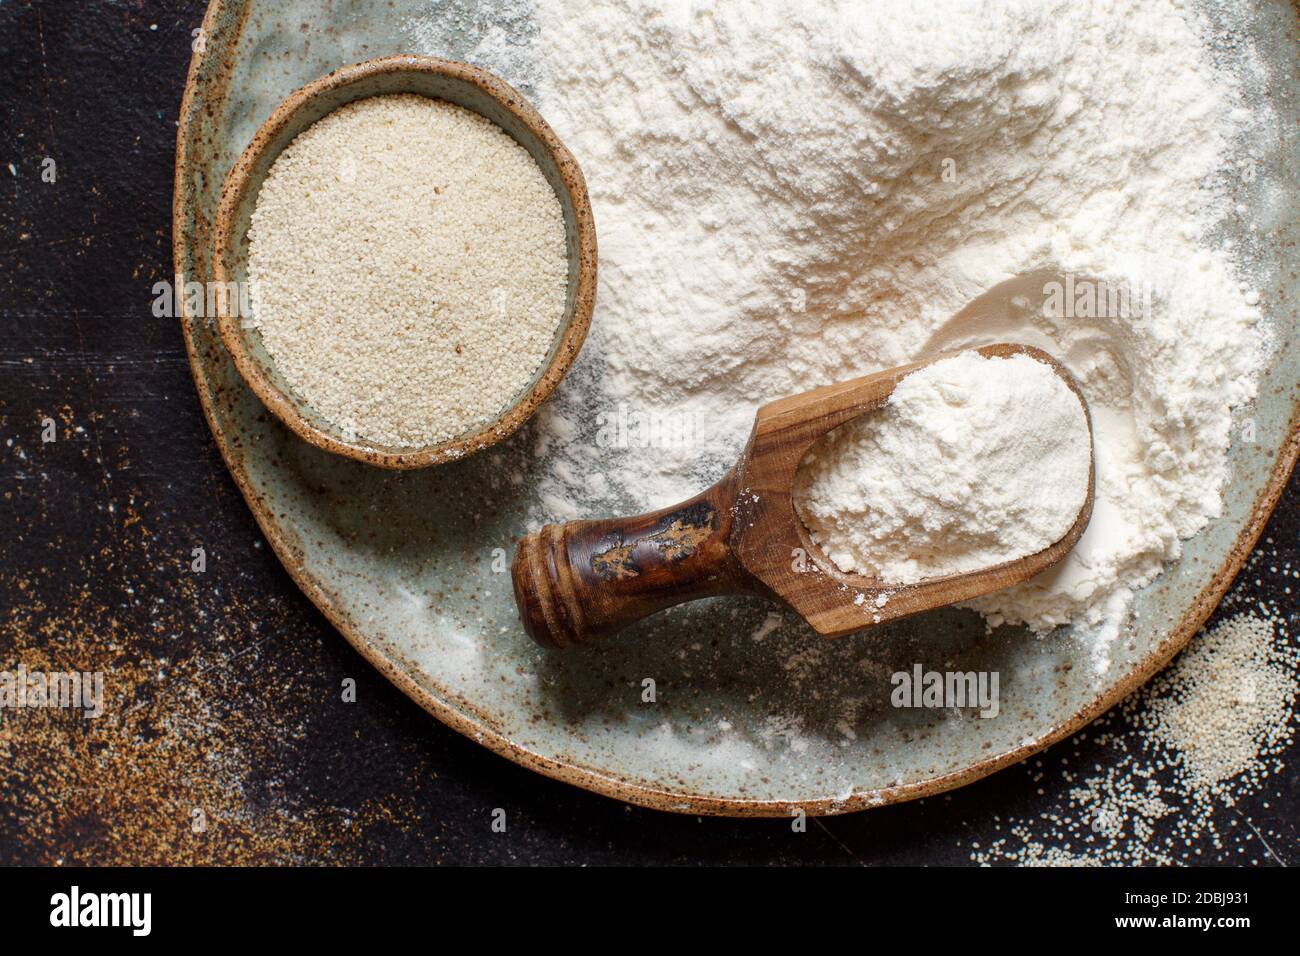 Raw fonio flour and seeds with a spoon on dark background ещз мшуц. Alternative flour Stock Photo